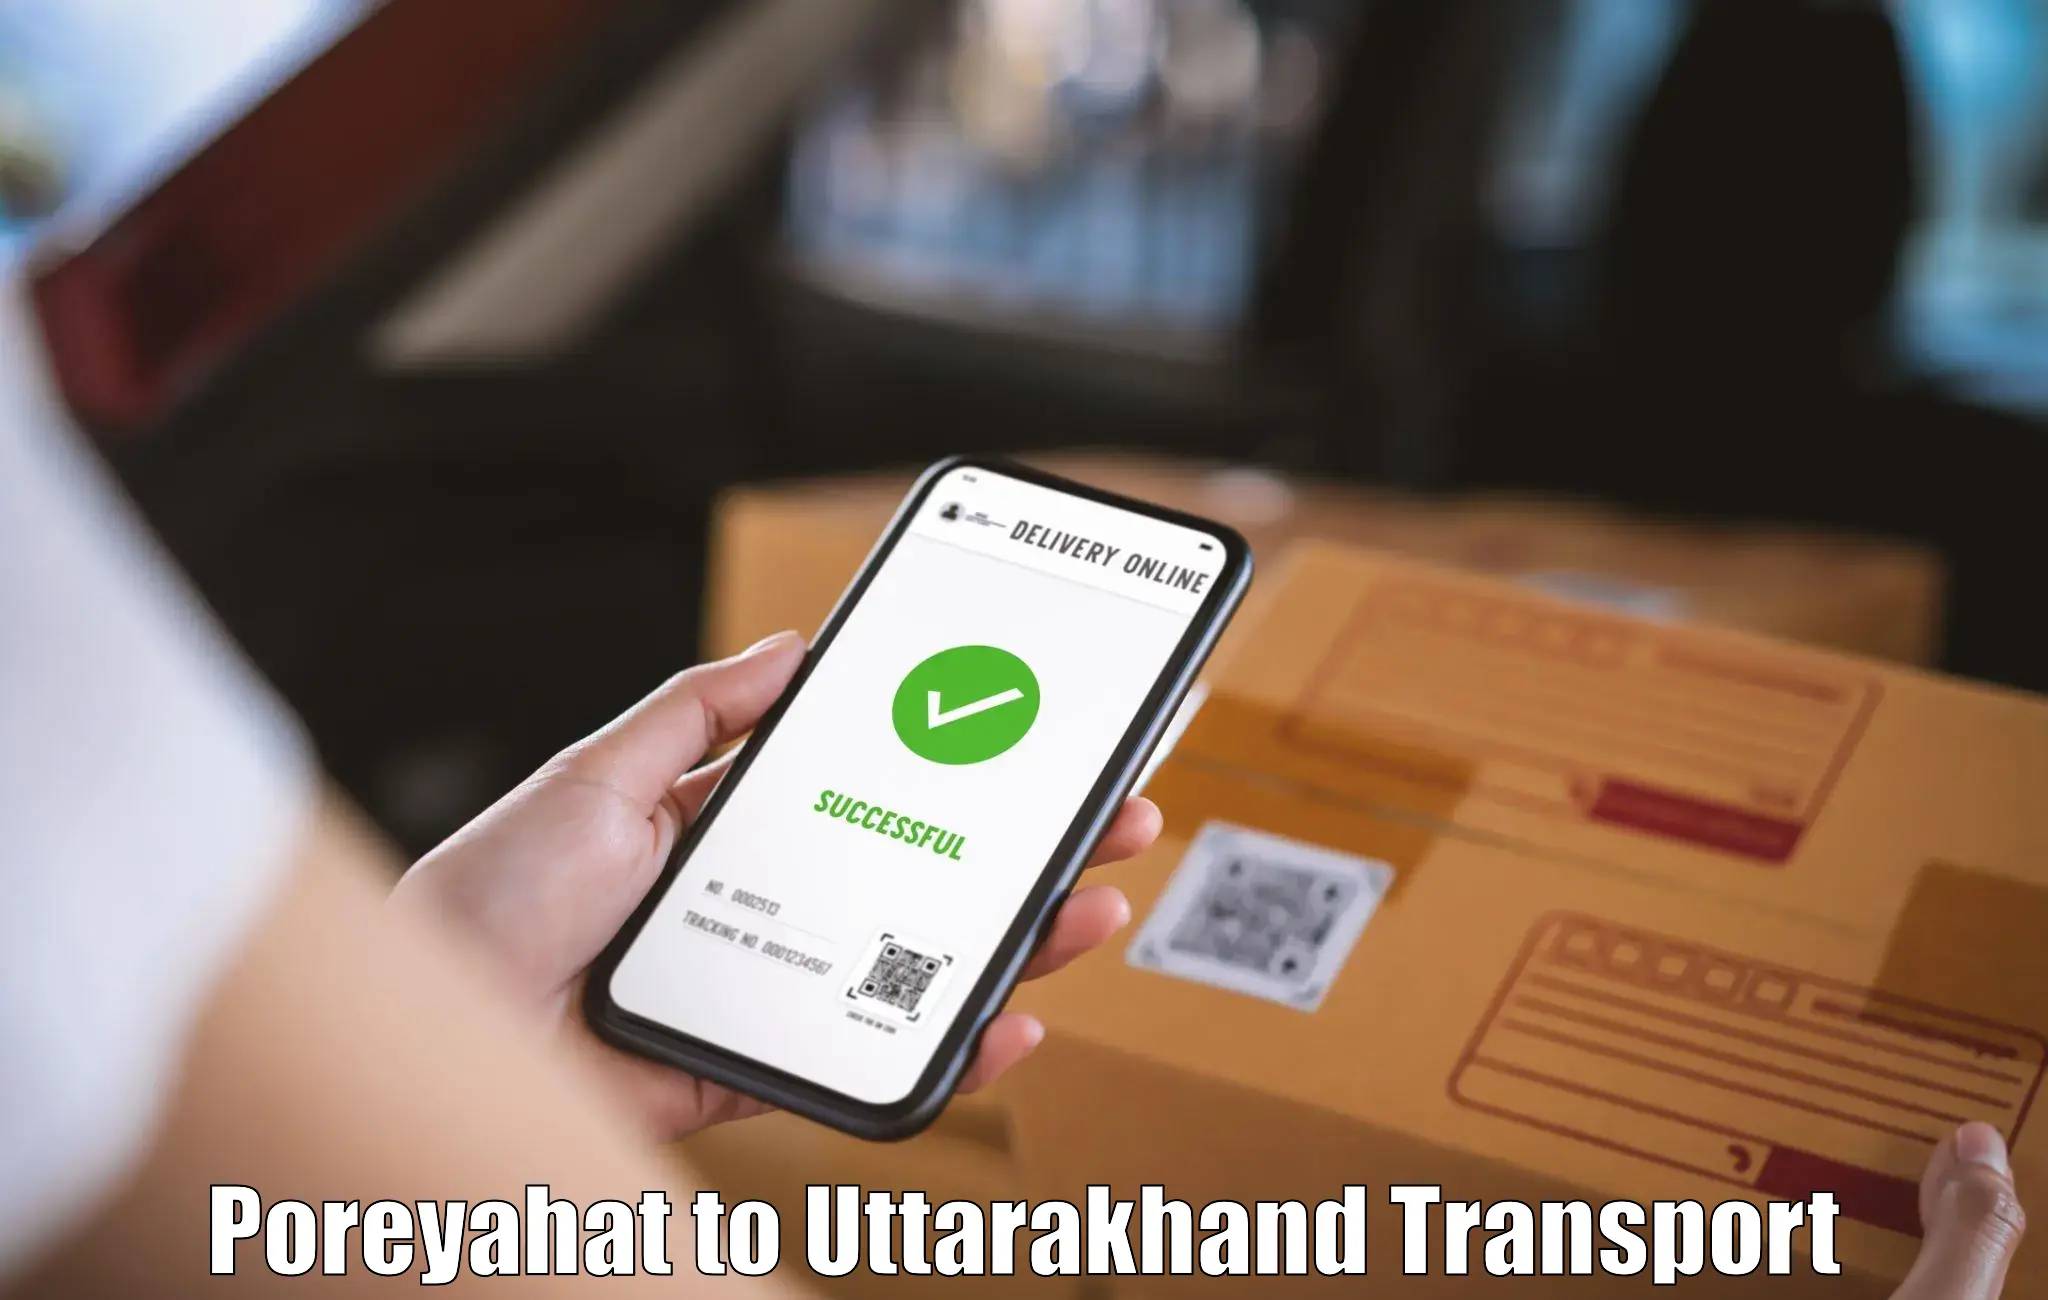 Transport in sharing Poreyahat to Paithani